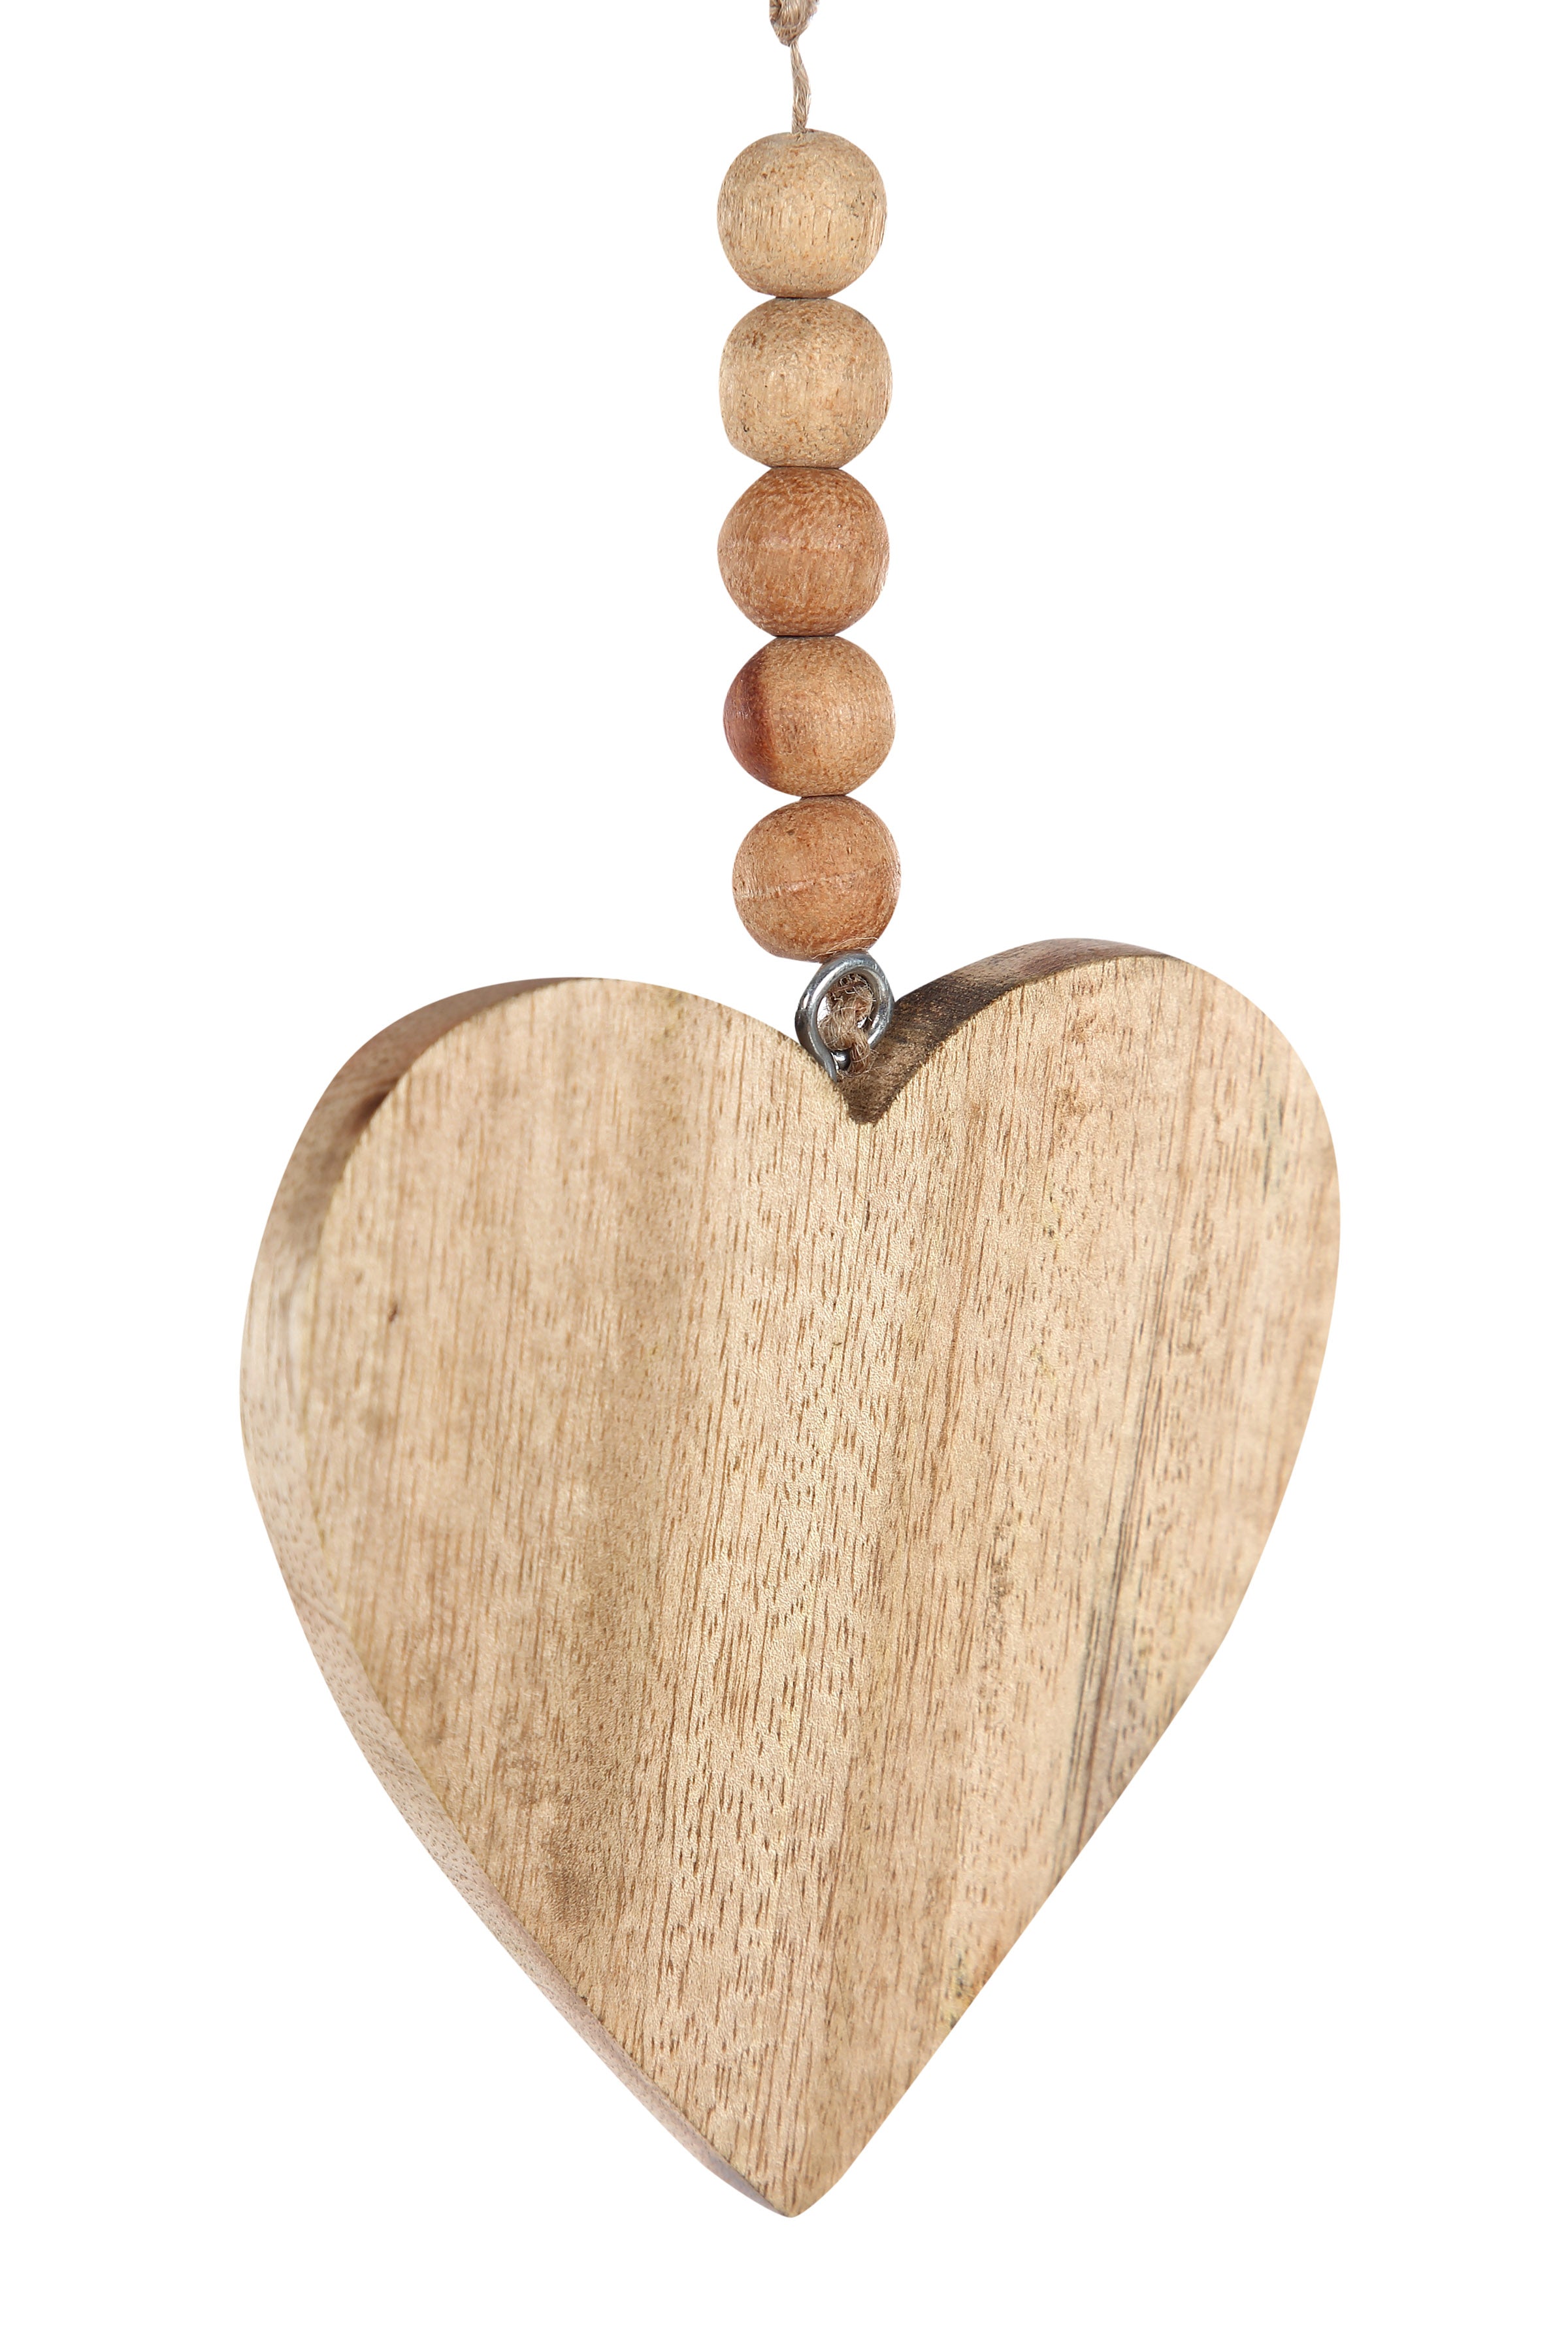 Handmade Wood Christmas Ornament - Heart - 11inch